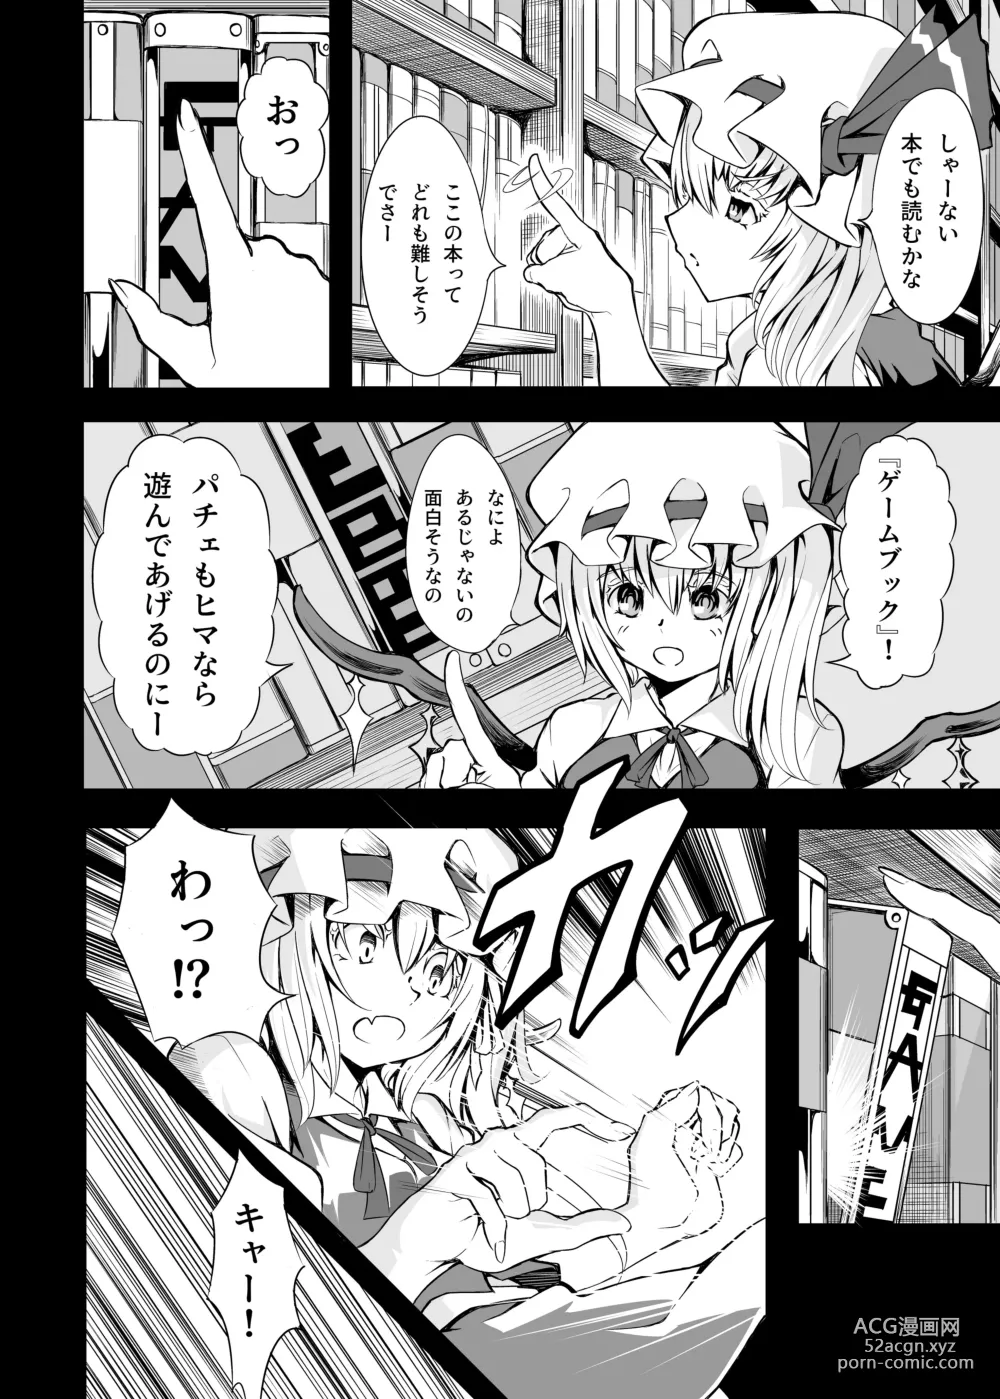 Page 3 of doujinshi Flan-chan and ETD